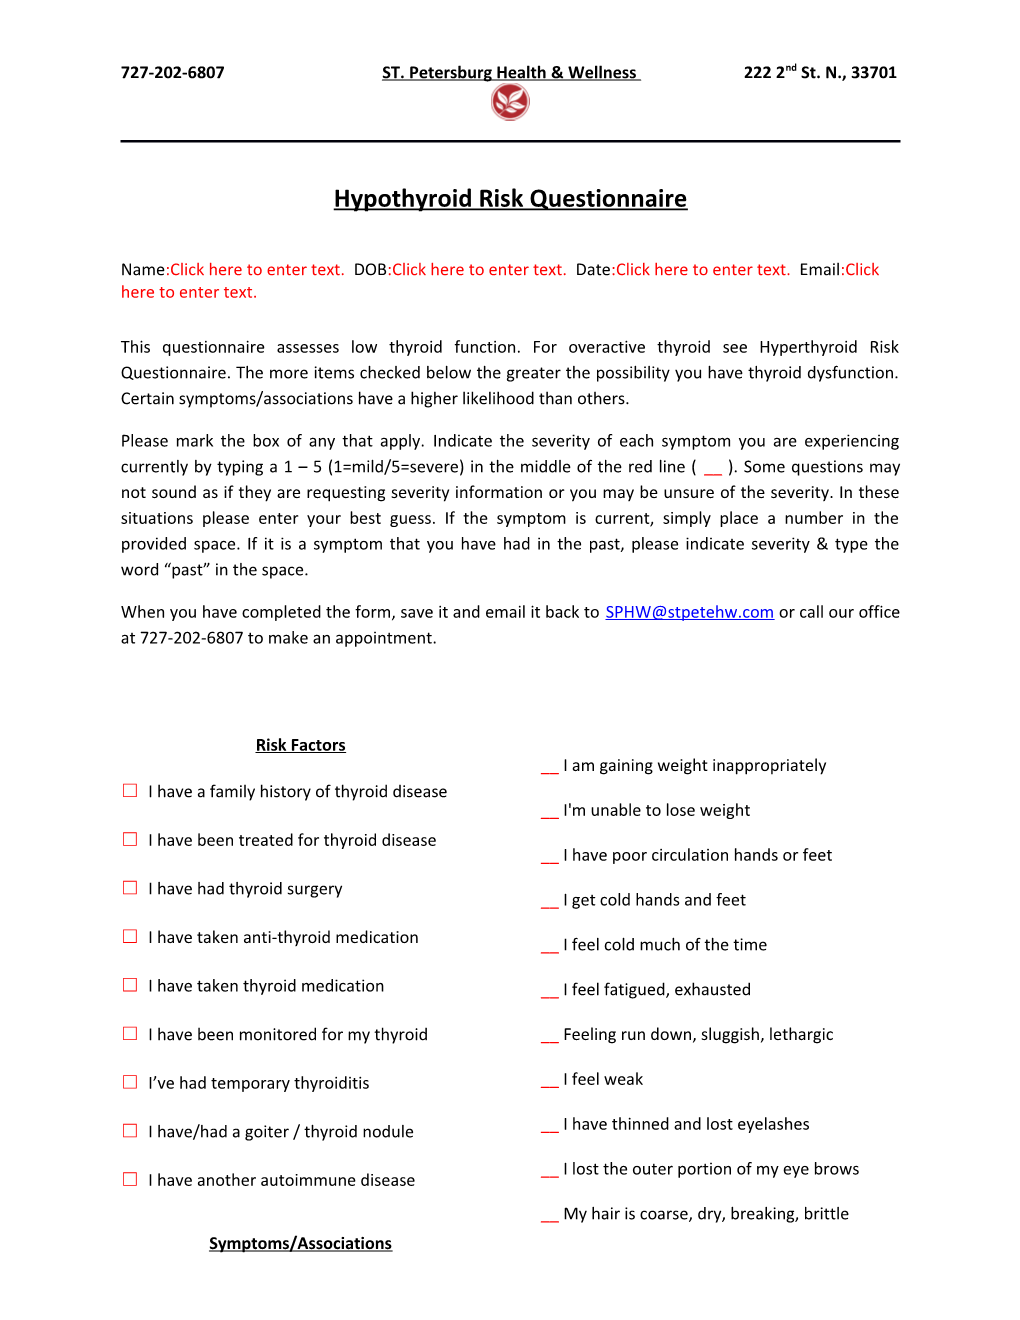 Hypothyroid Risk Questionnaire